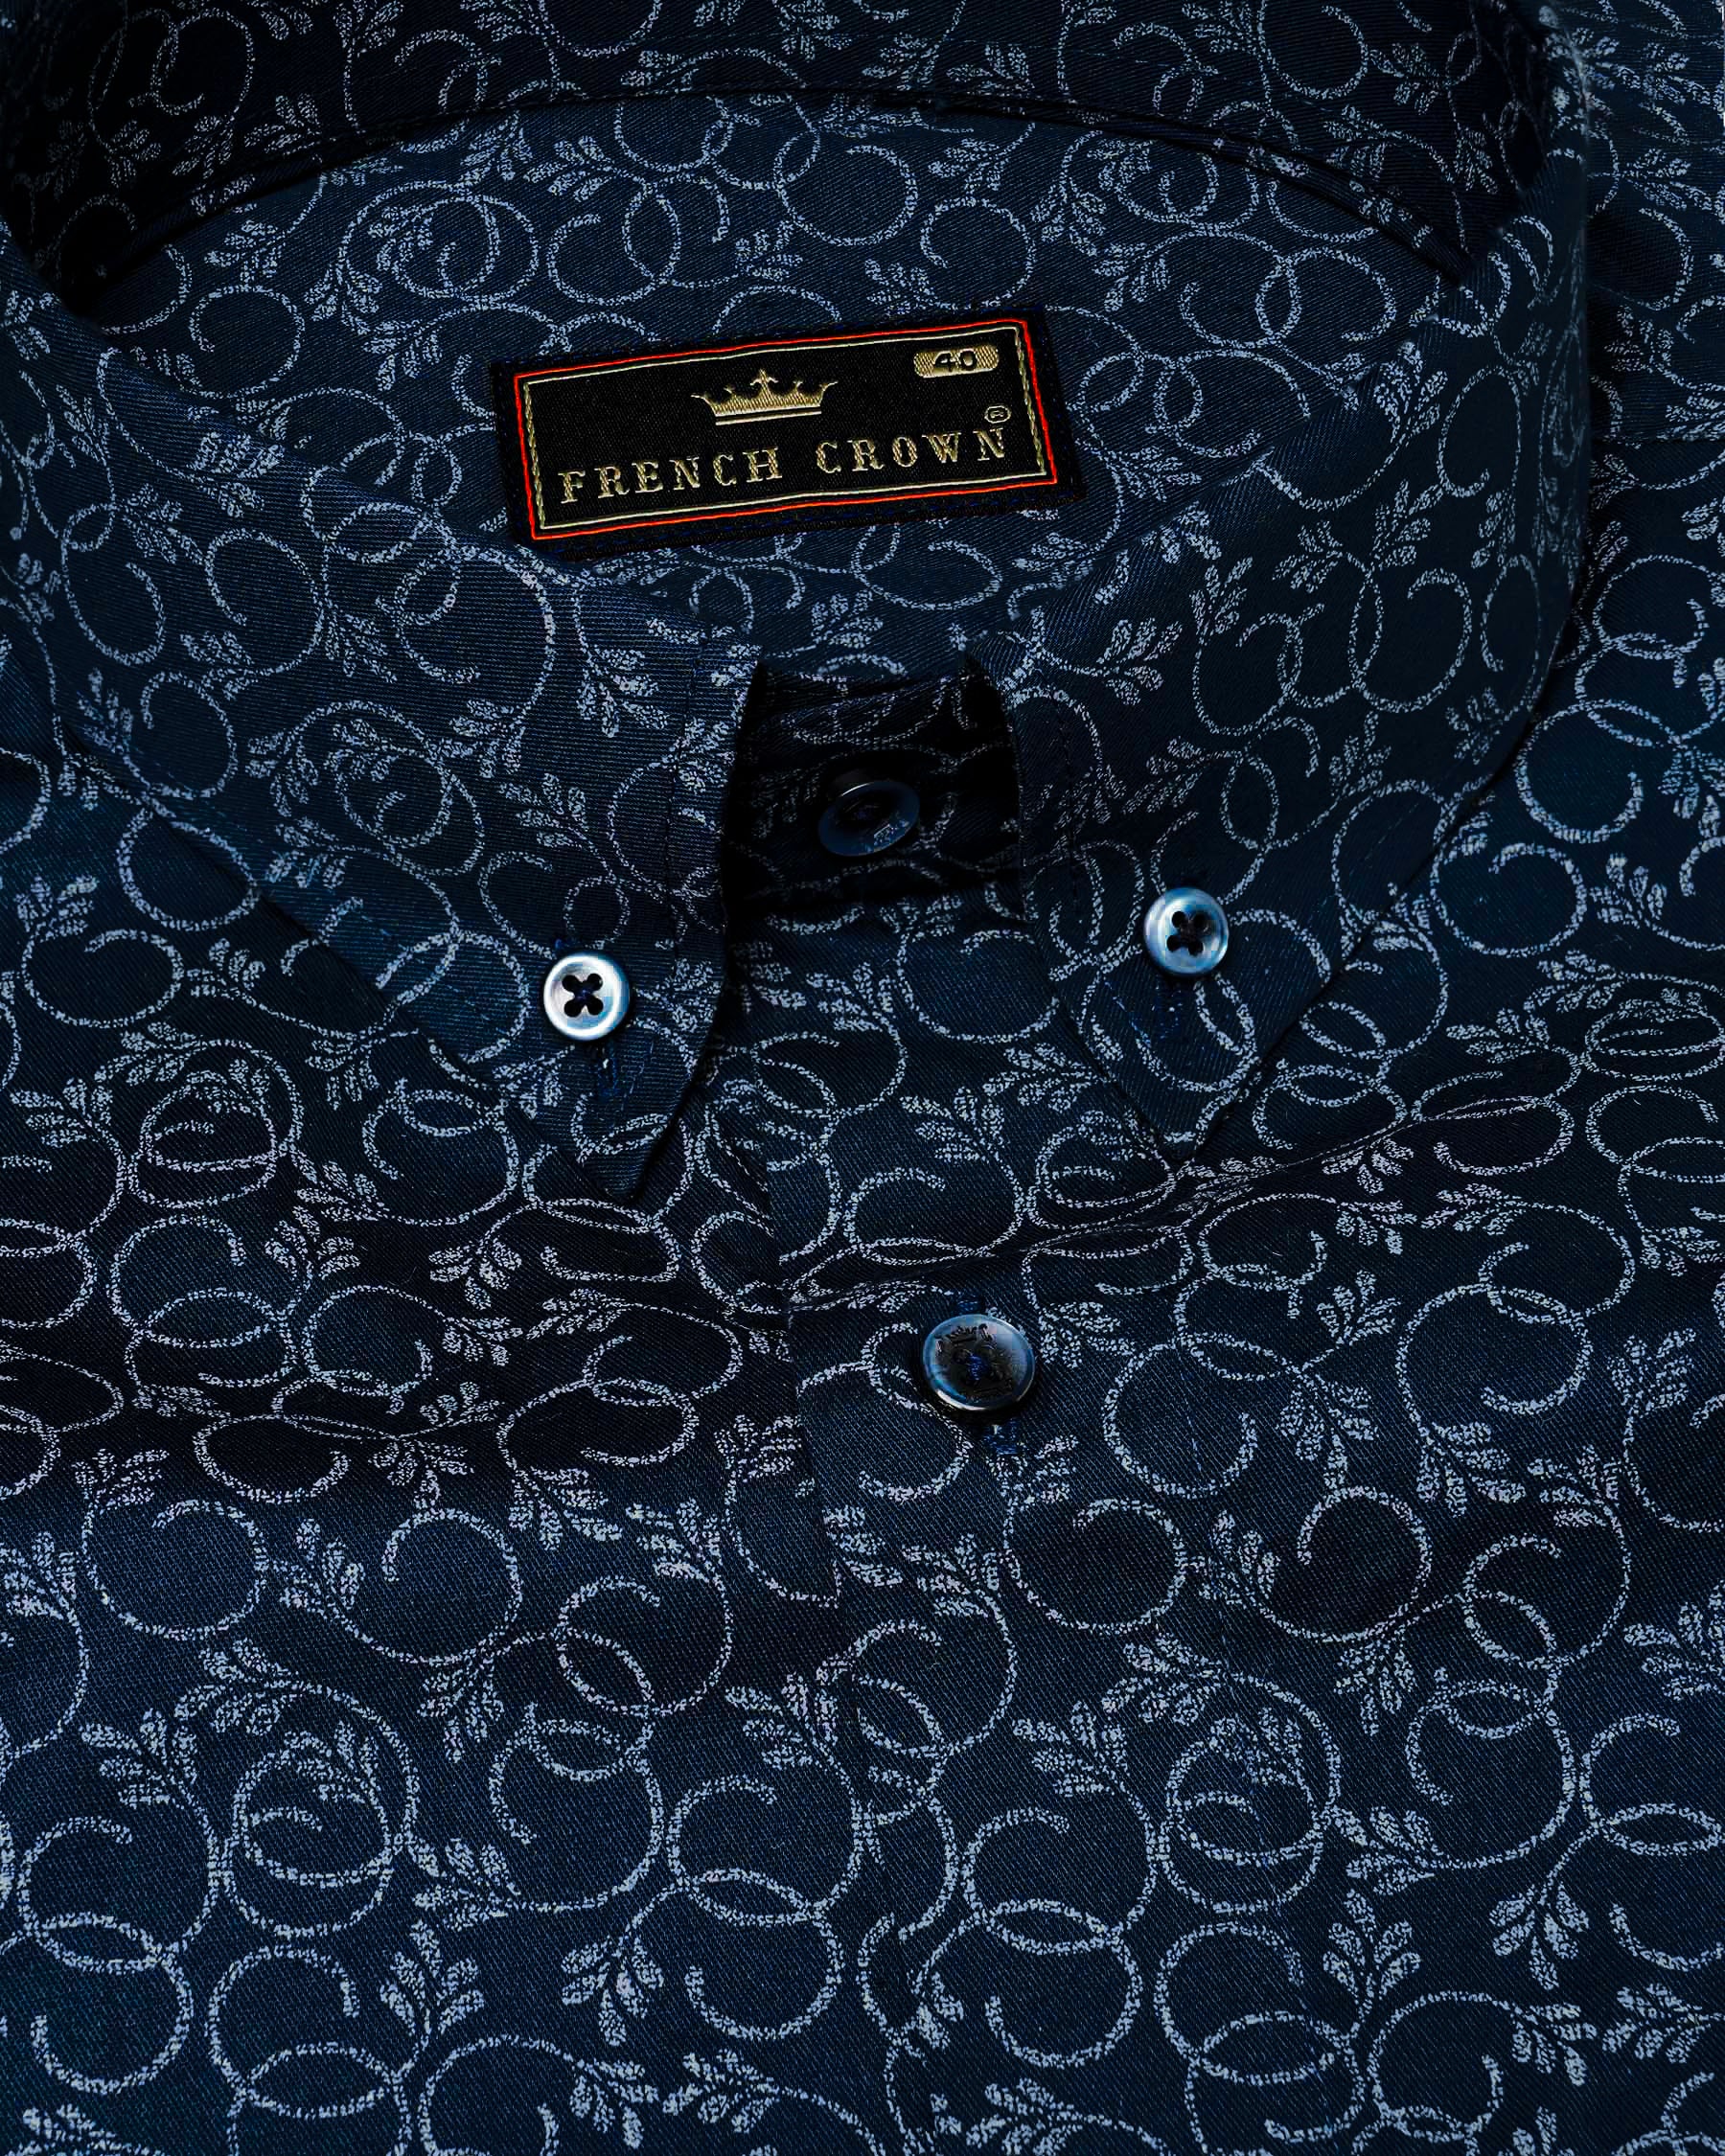 Bunting Blue Chintz Printed Twill Premium Cotton Shirt